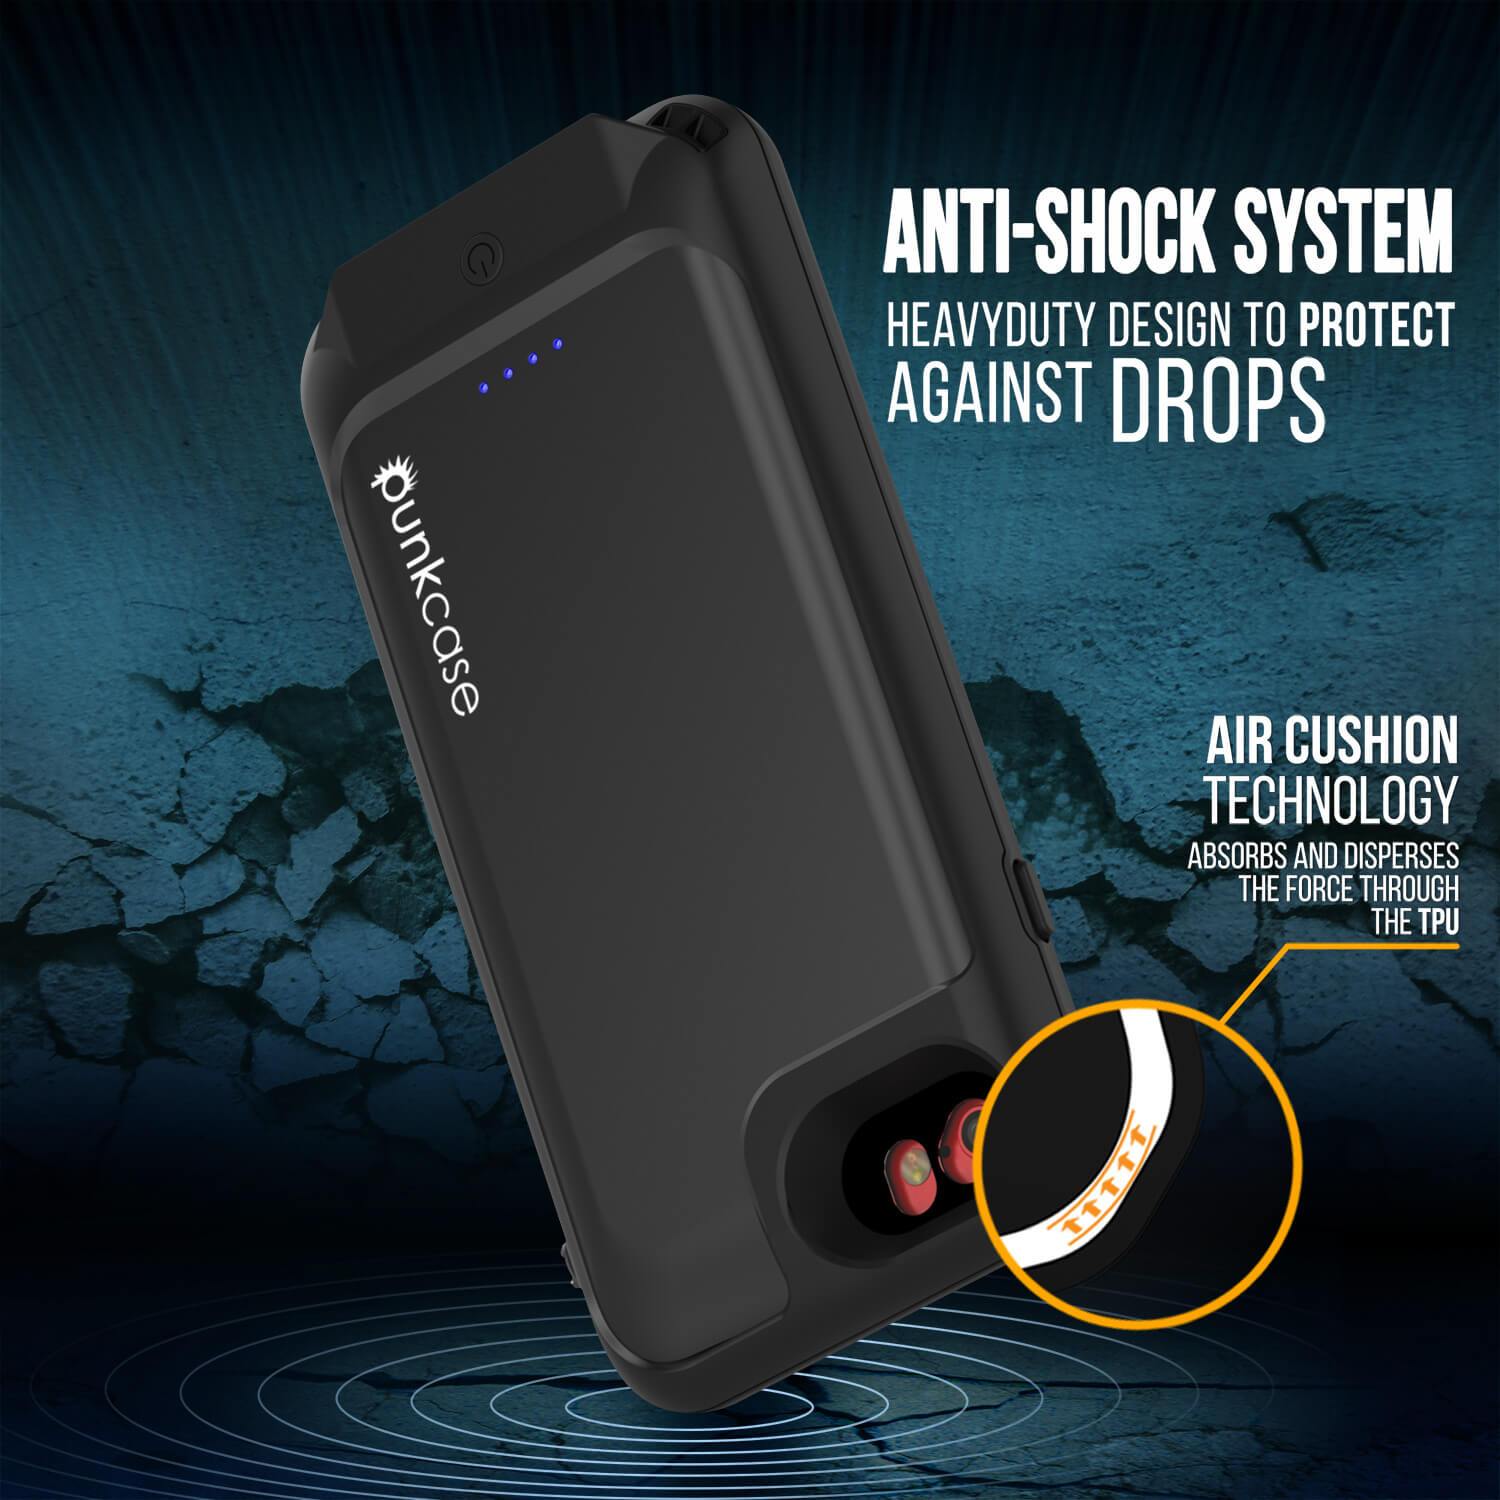 iPhone 6/6s Battery Case PunkJuice  - Waterproof Slim Portable Power Juice Bank with 2750mAh High Capacity (Jet Black) - PunkCase NZ